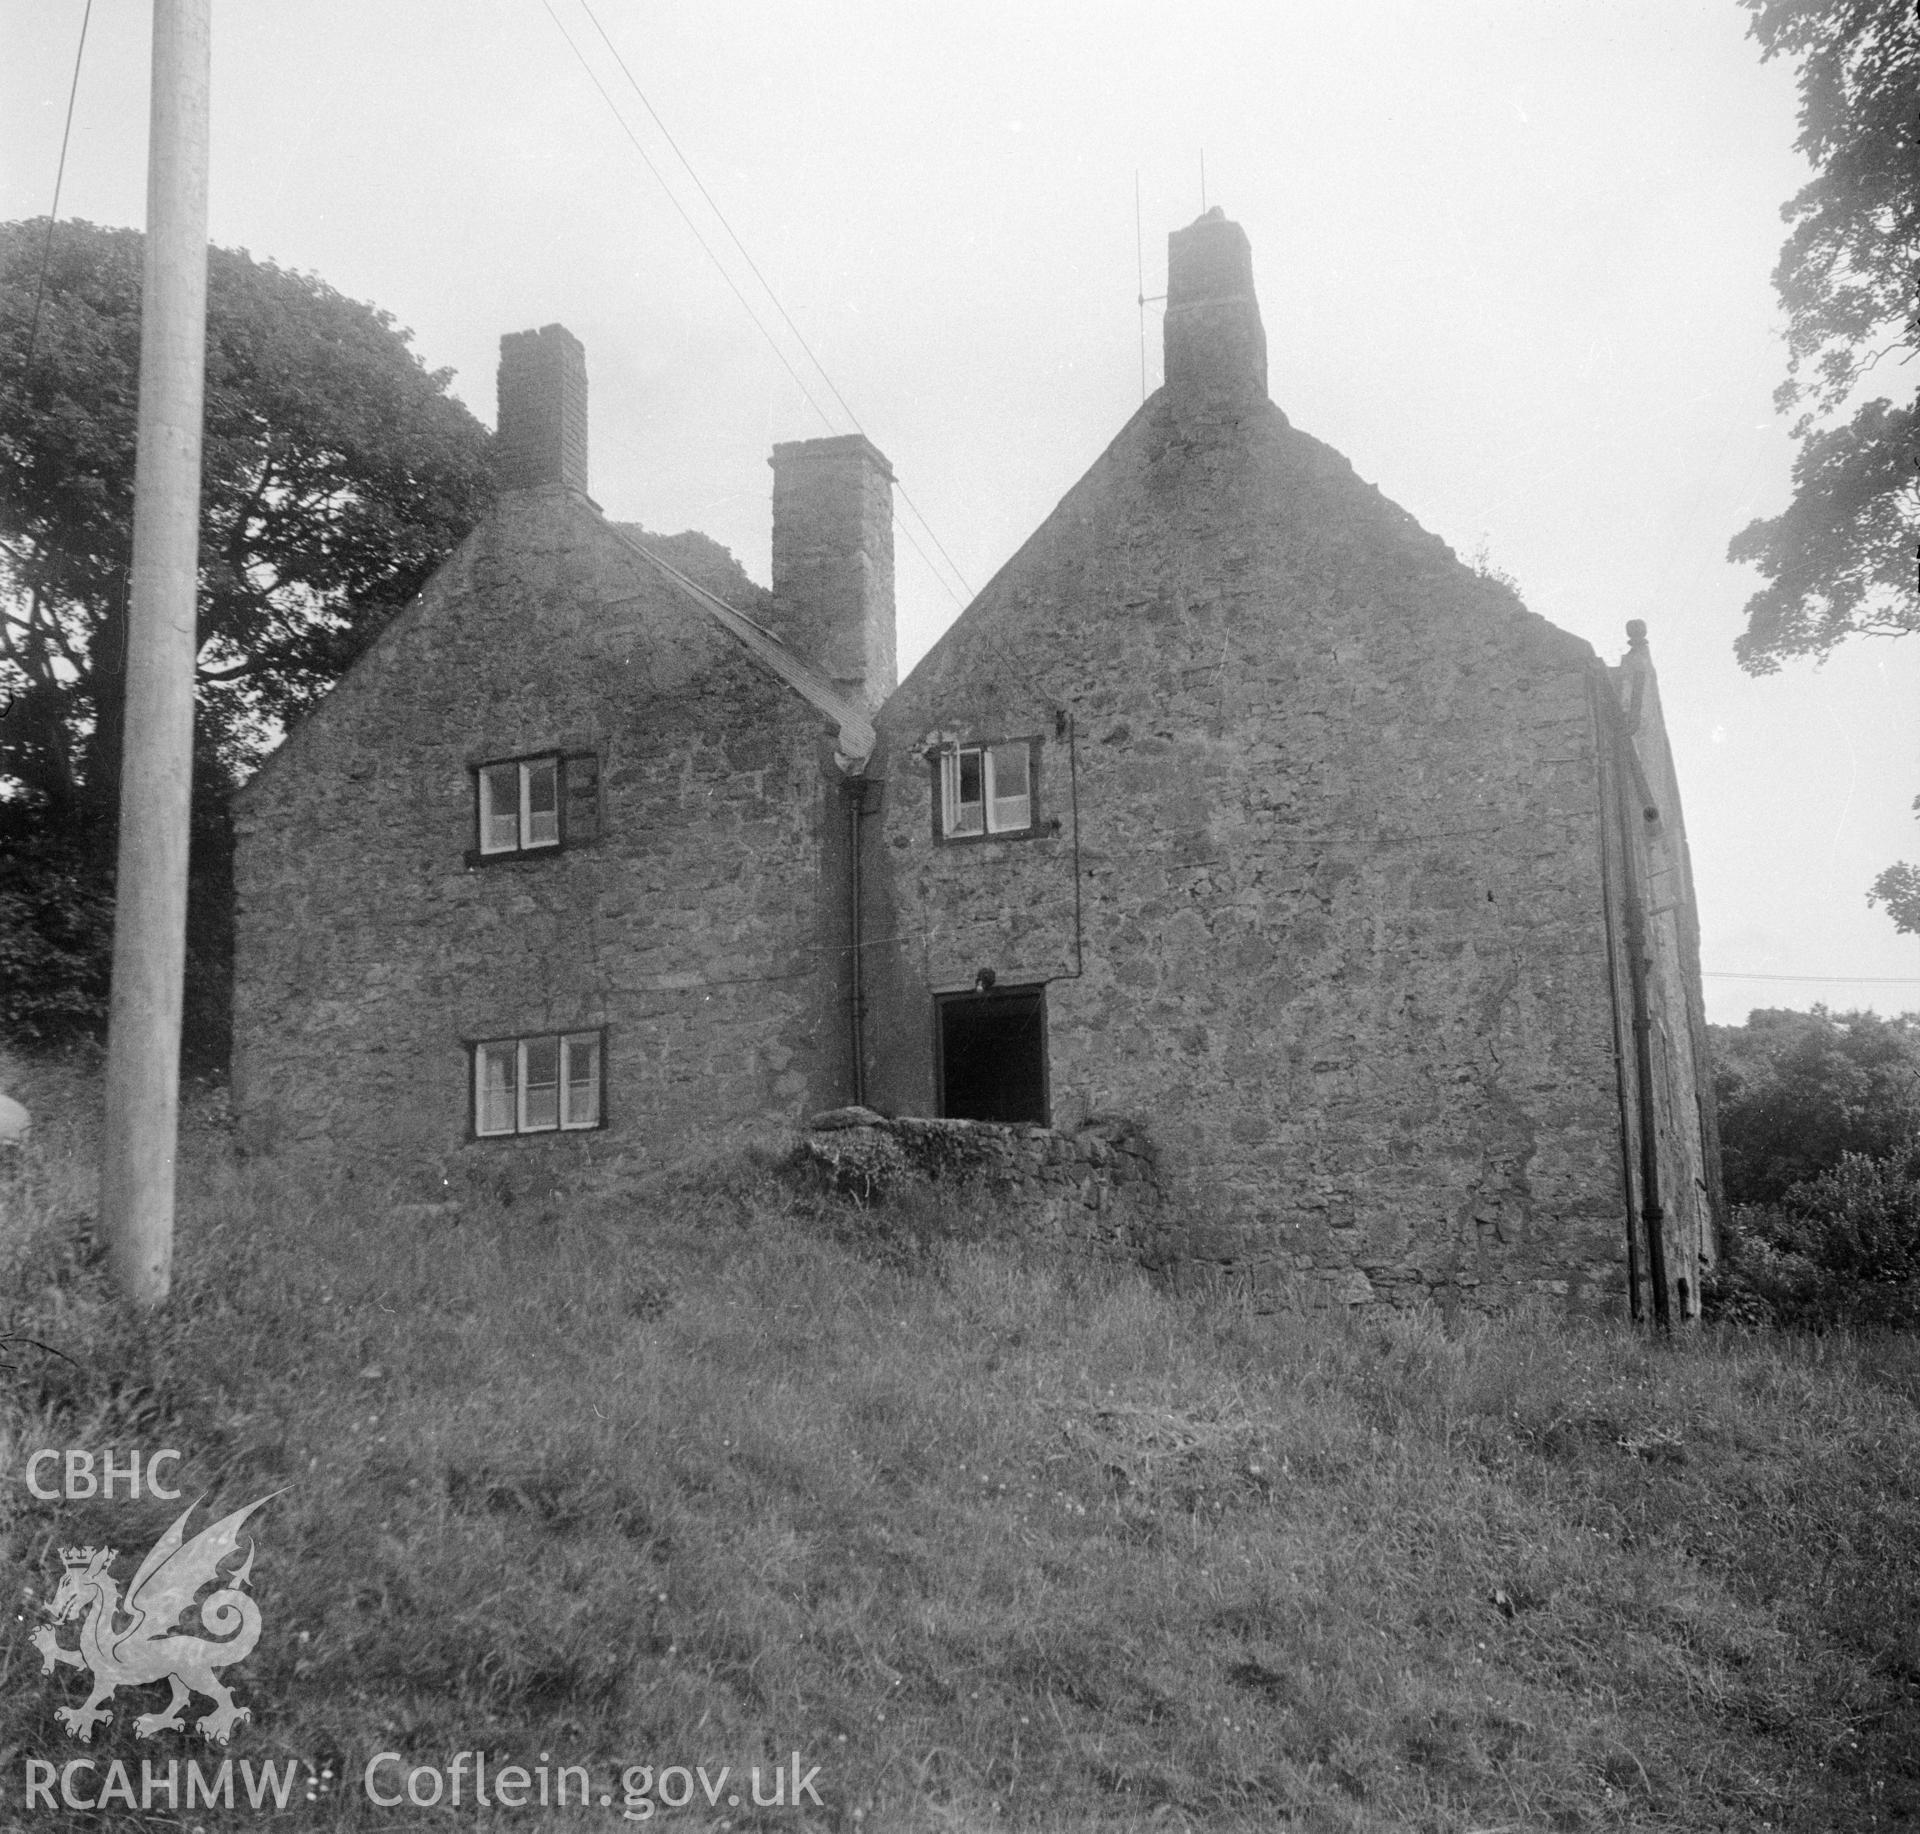 Digital copy of a nitrate negative showing gable end view of Pentre Cwm, Flintshire.